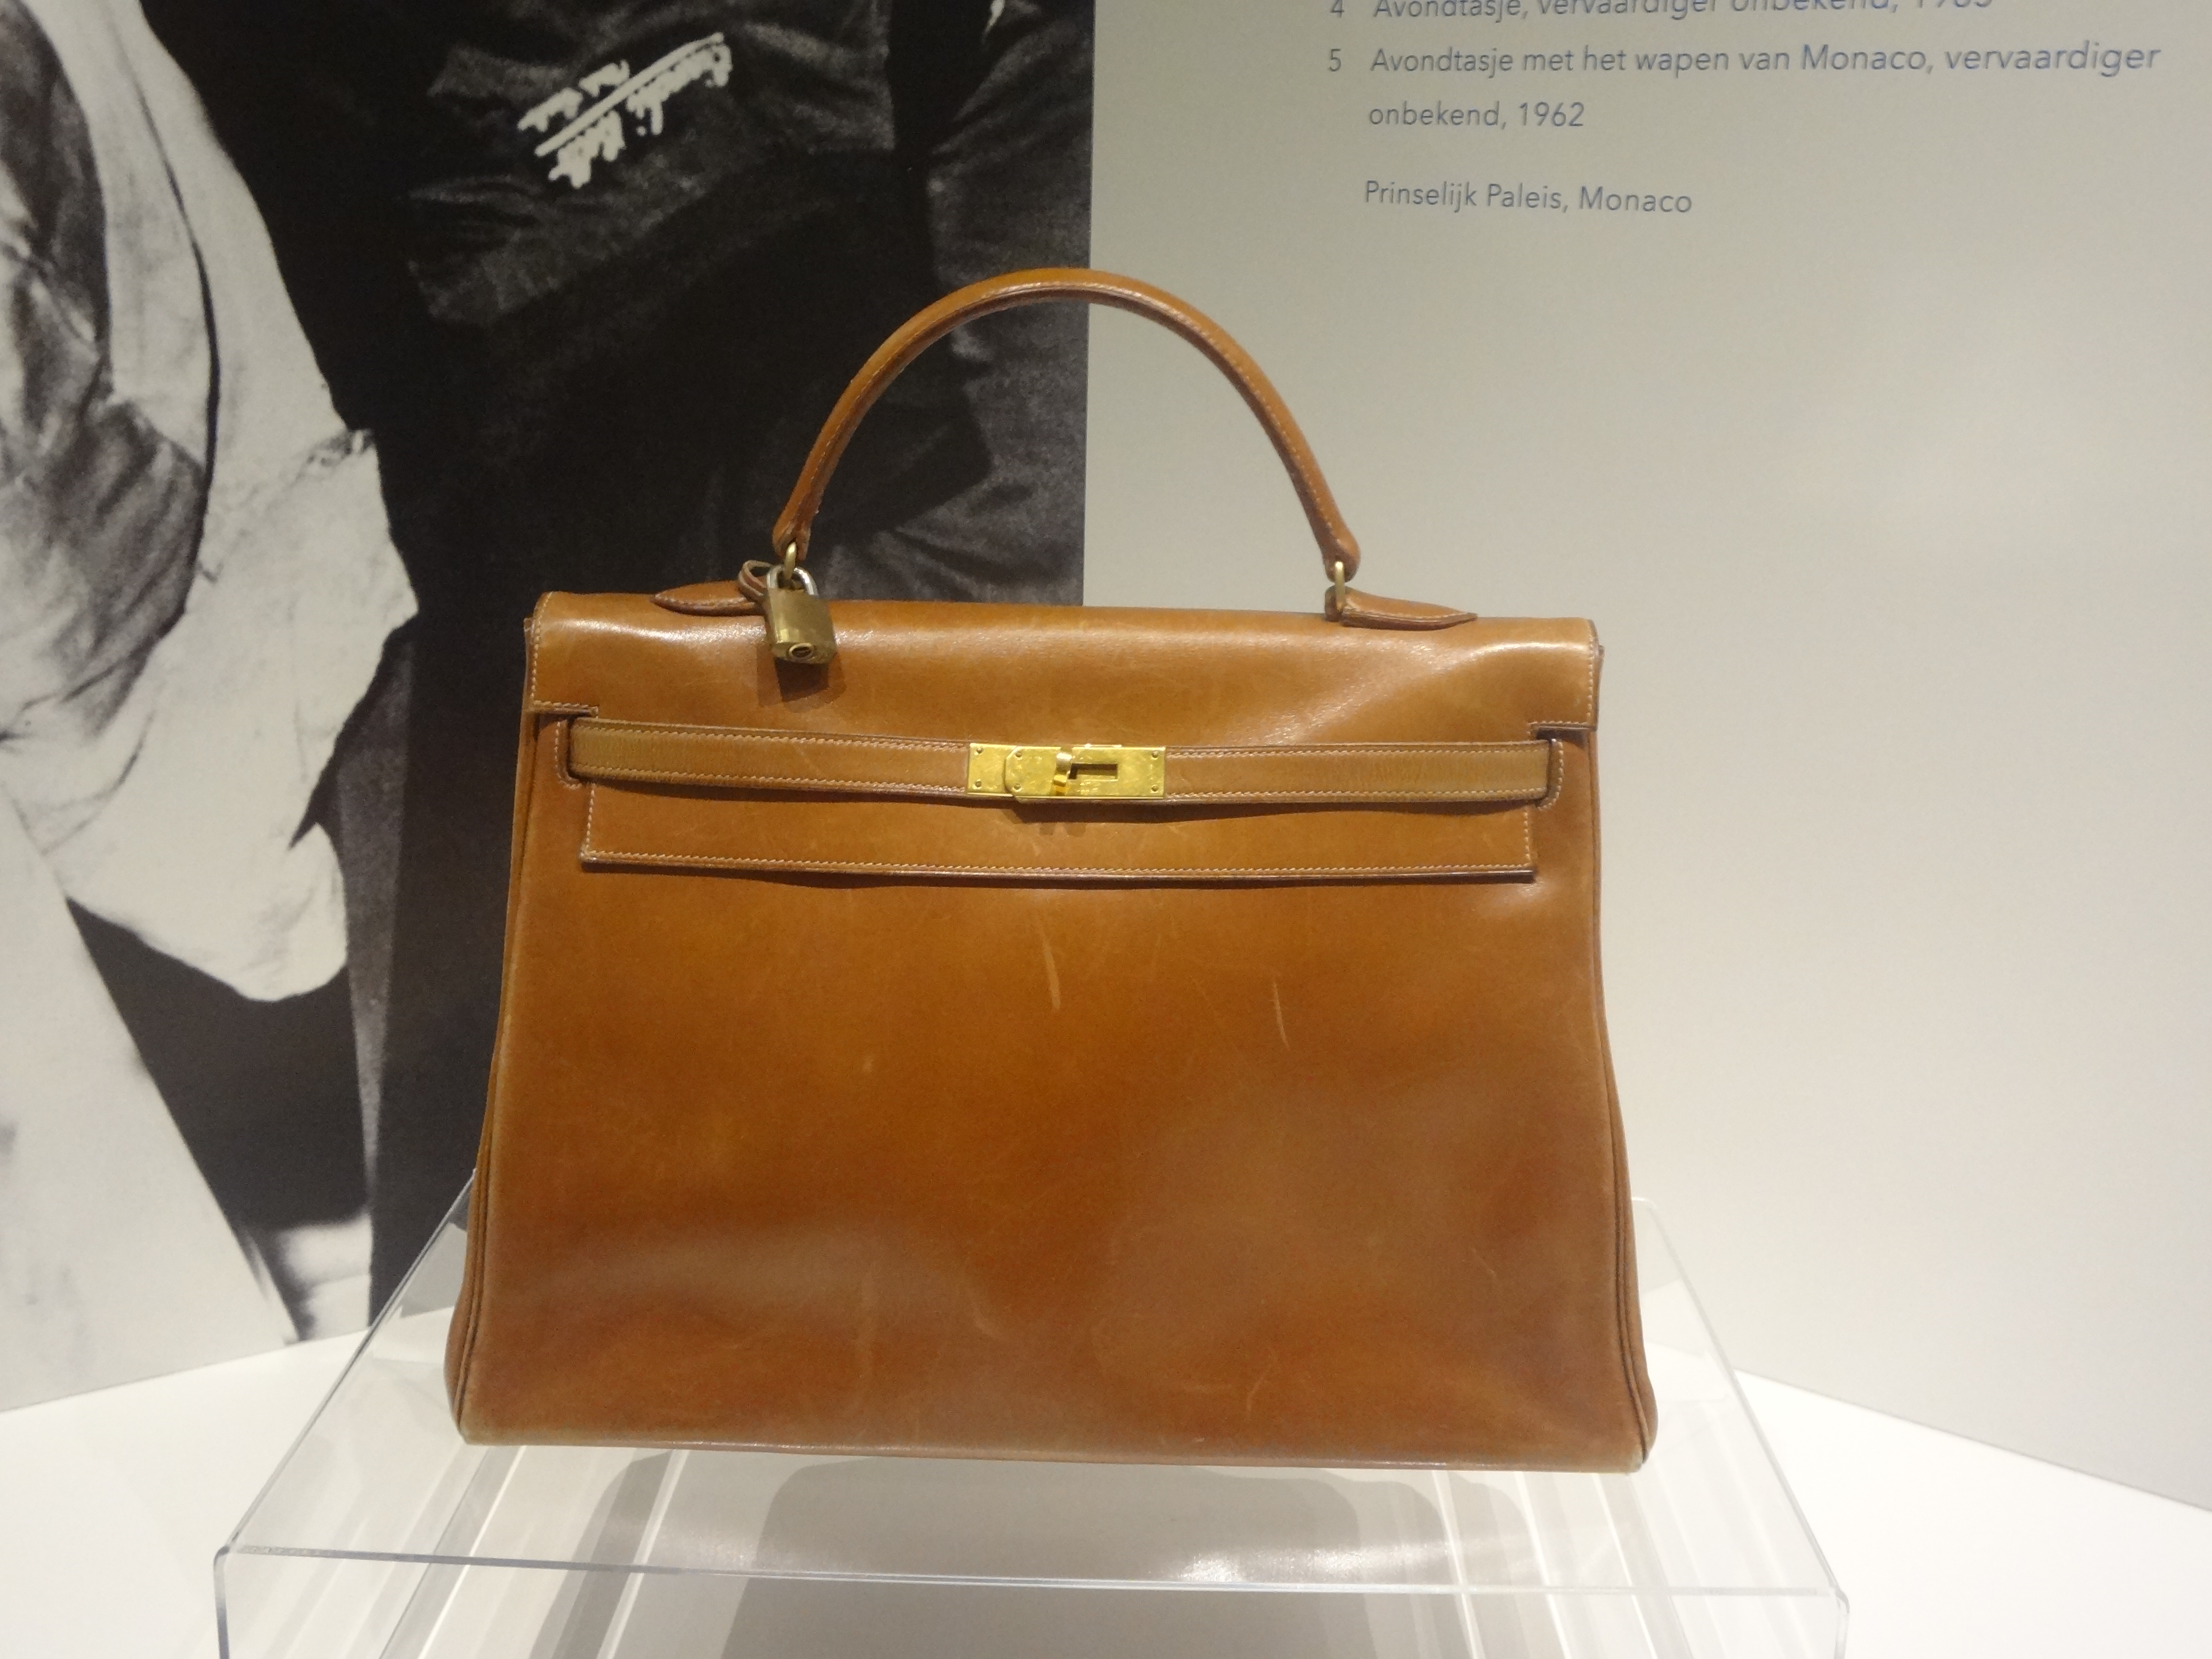 Hermes Birkin Bag - Design Overview and History